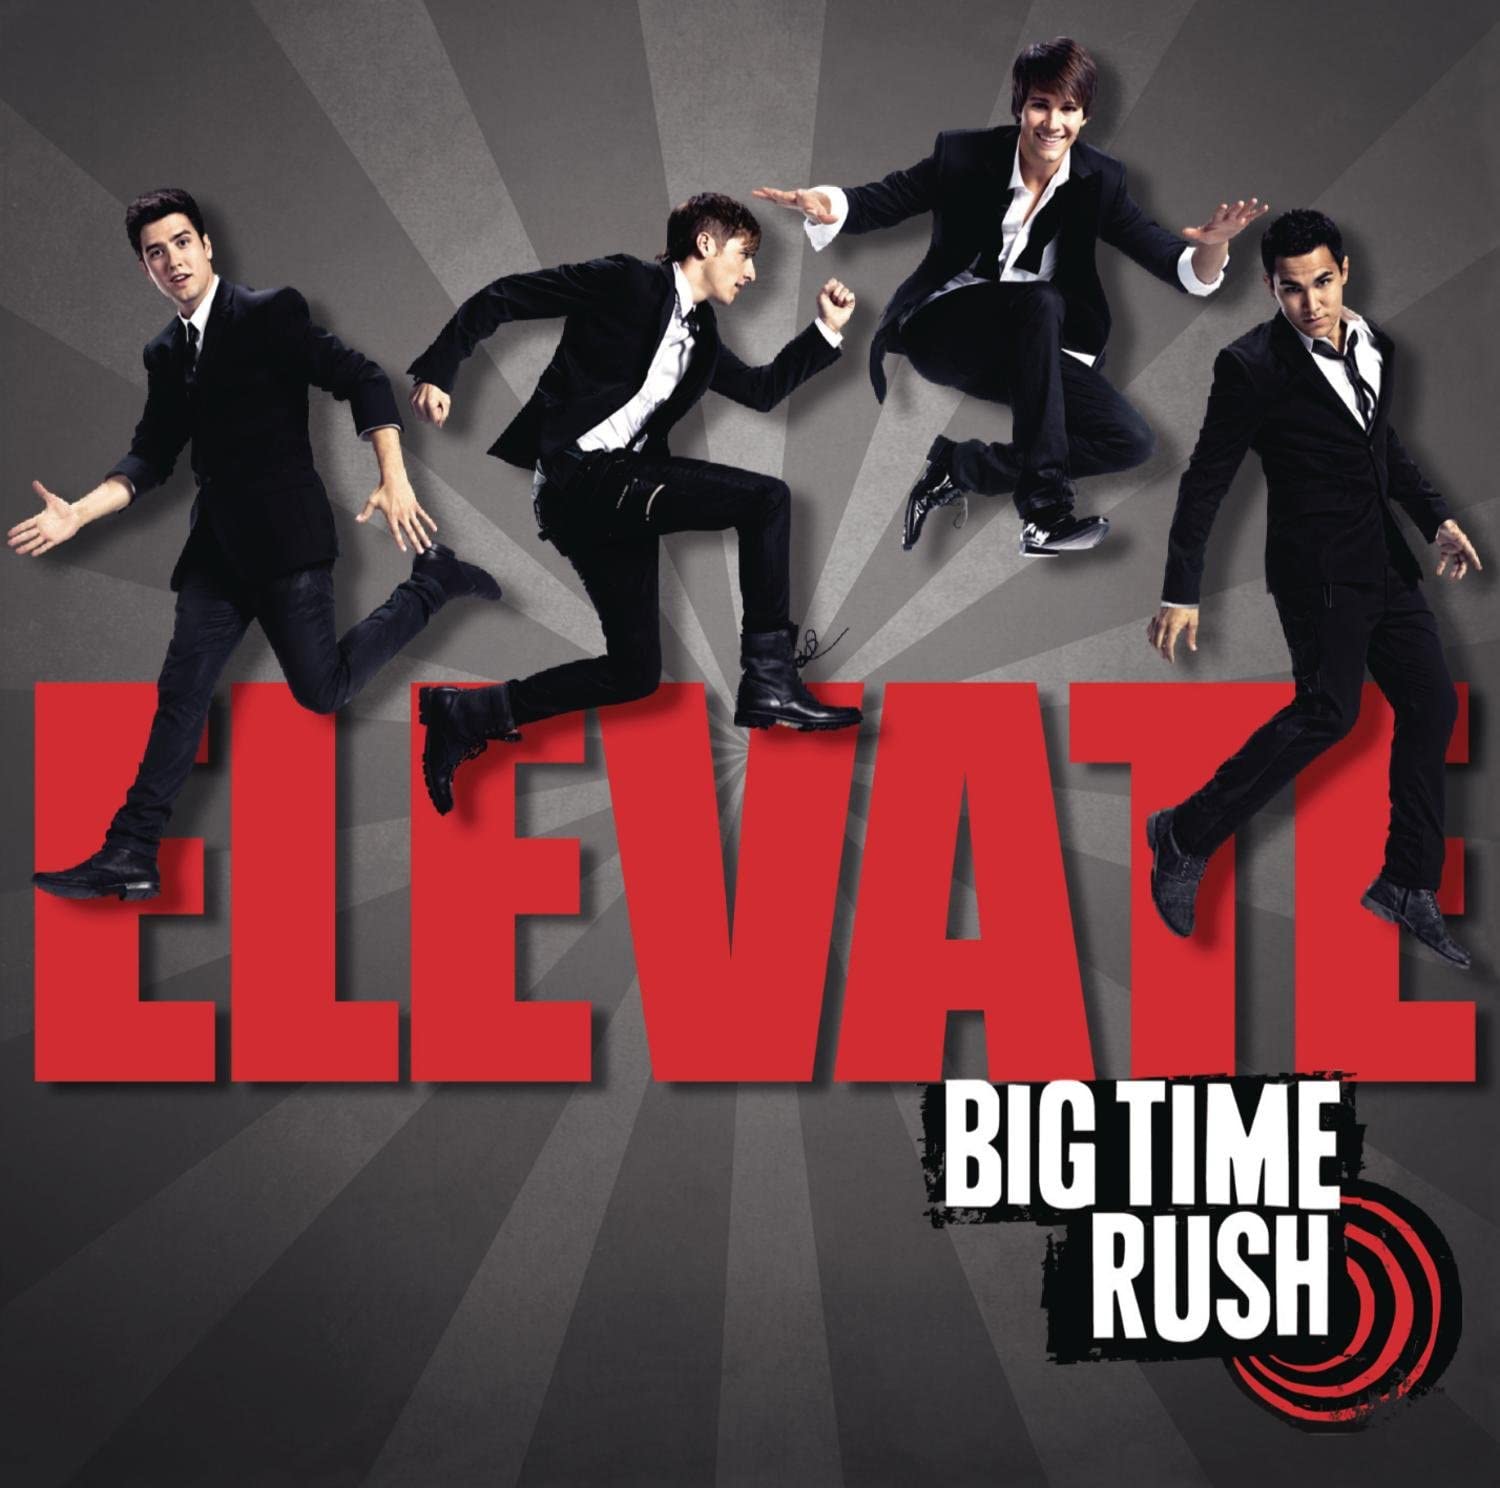 Big Time Rush — Epic cover artwork